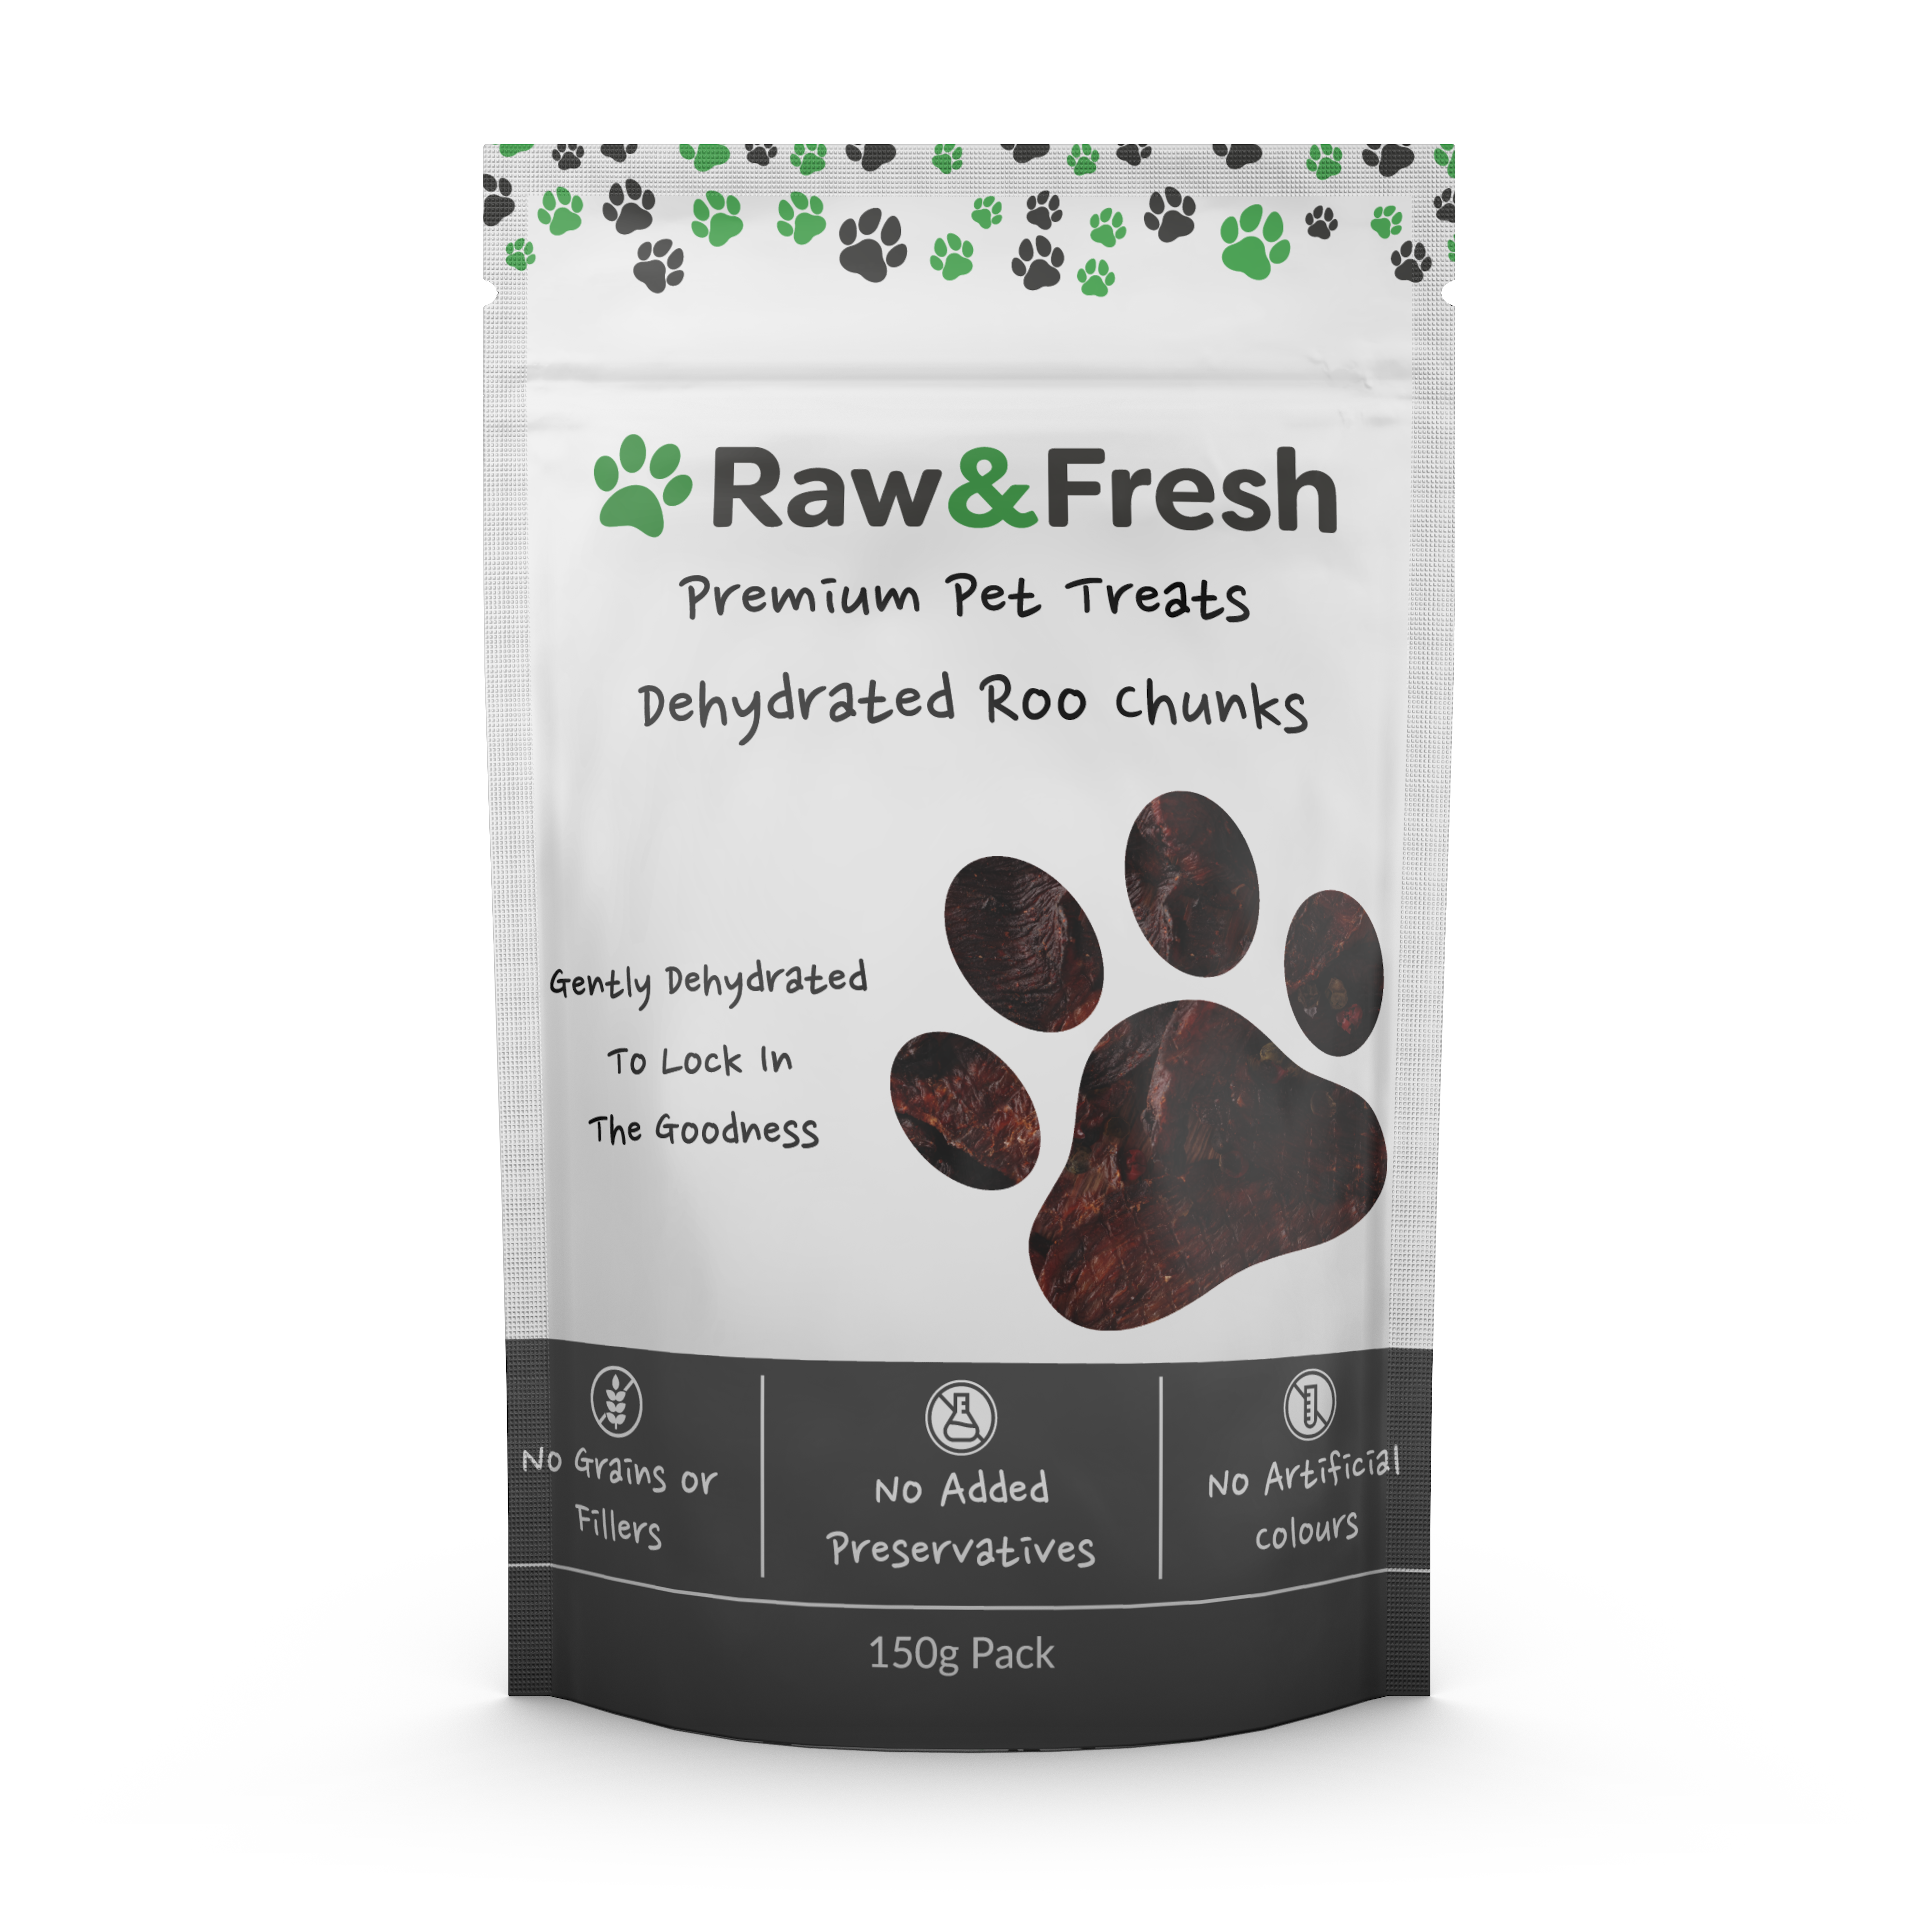 Raw & Fresh Dehydrated Kangaroo Chunks Dog Treats 150g Pack